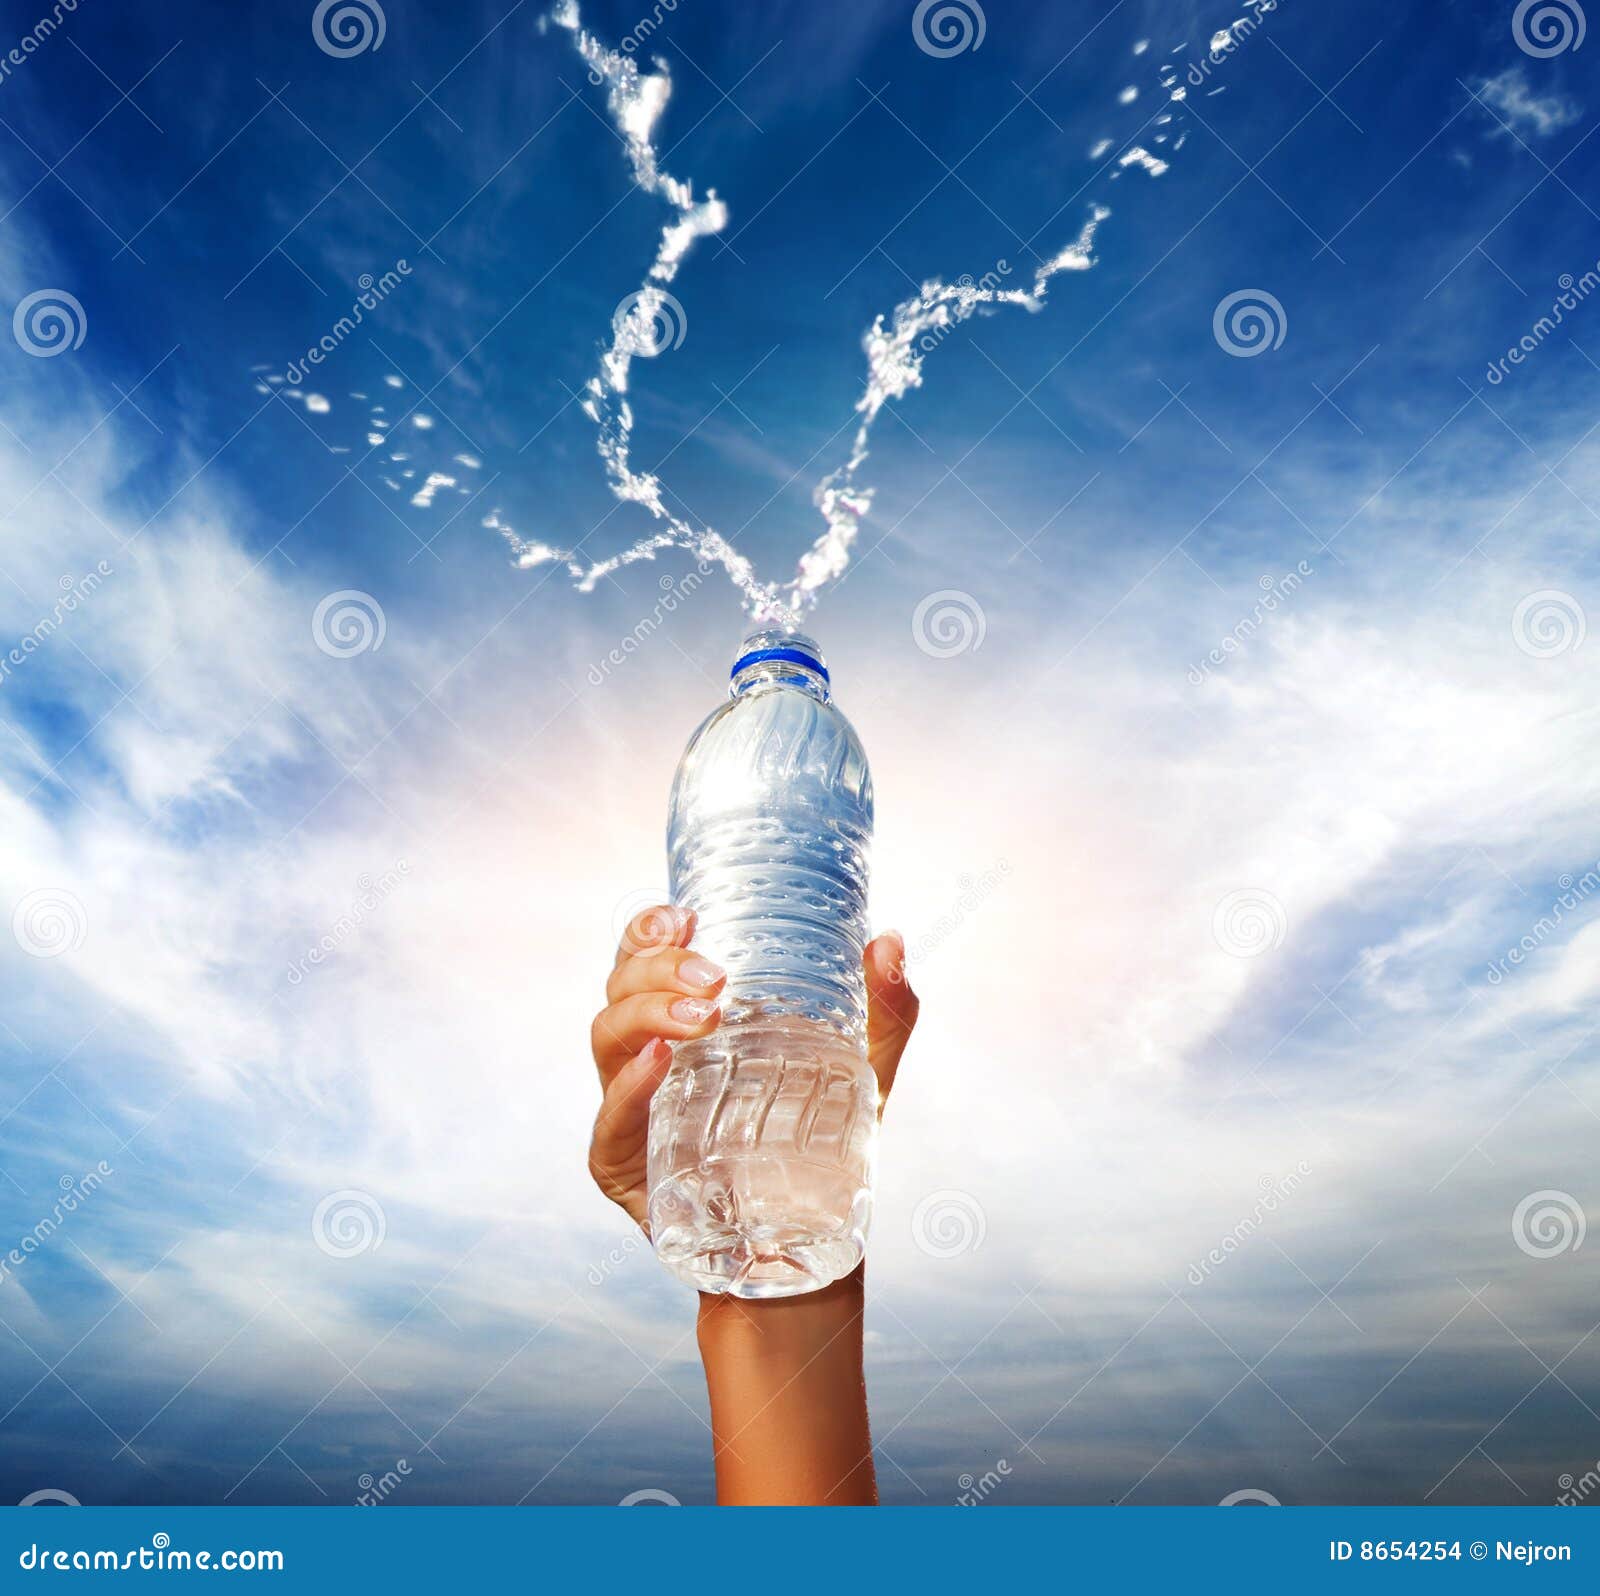 https://thumbs.dreamstime.com/z/hand-holding-bottle-water-8654254.jpg